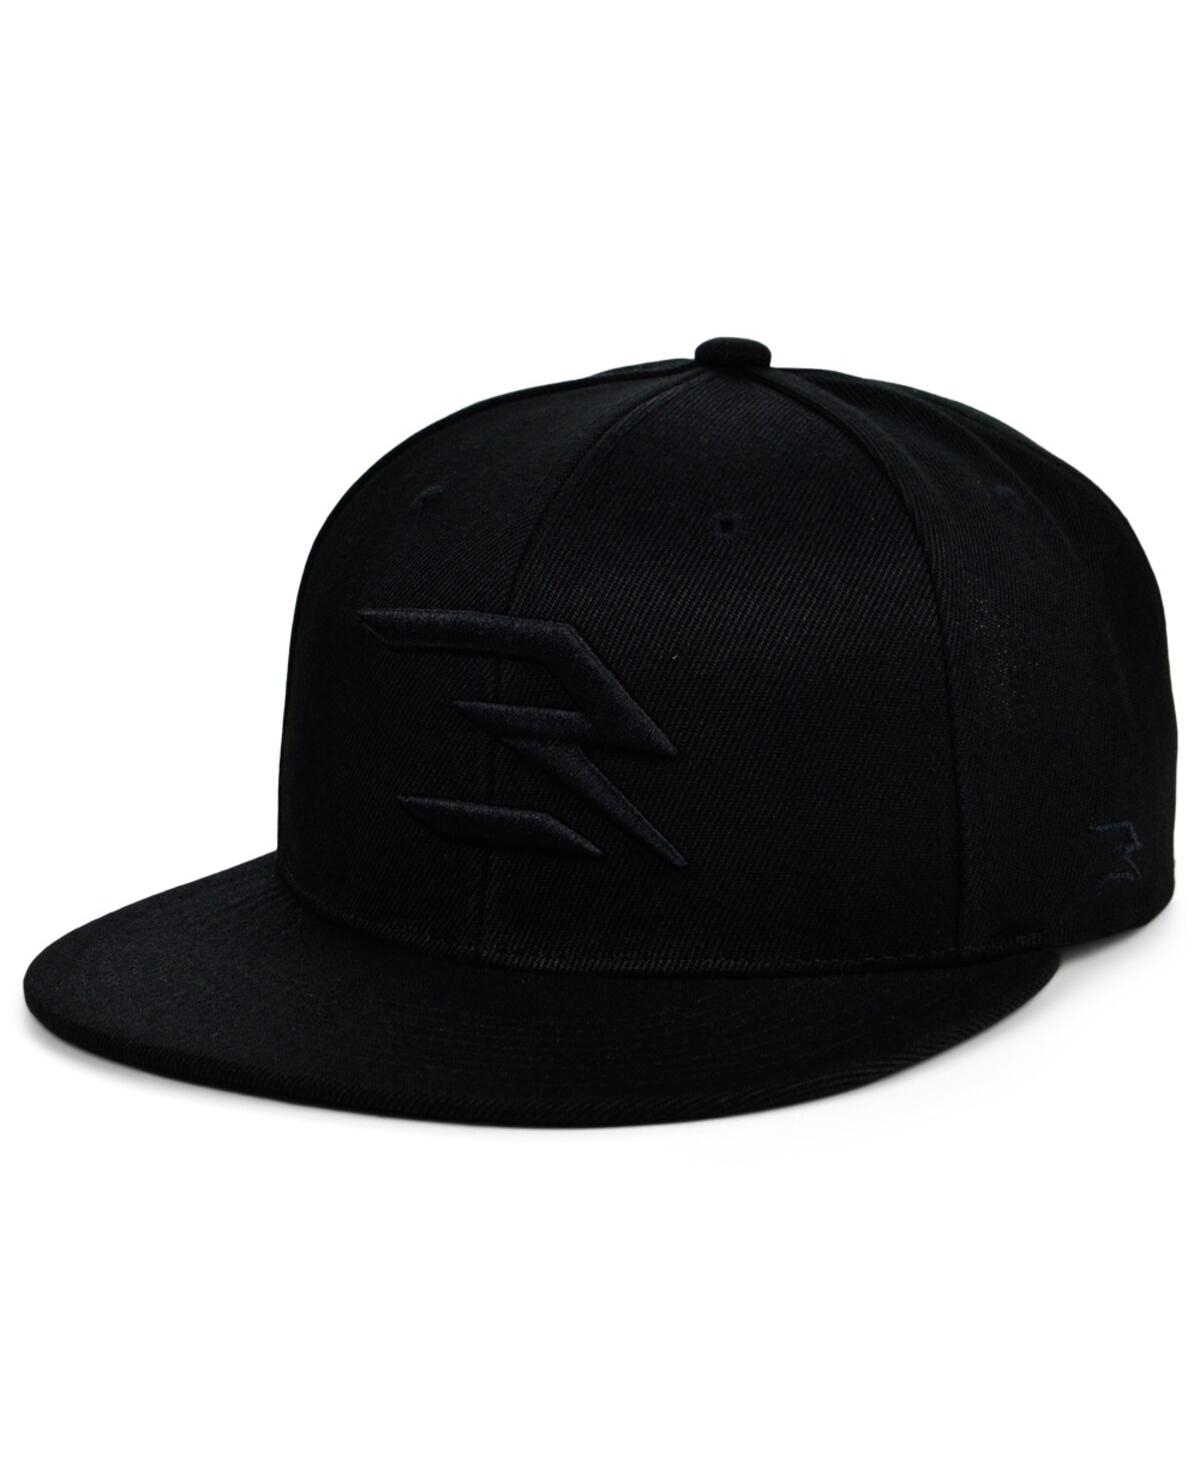 Men's Black Nike 3BRAND by Russell Wilson Fashion Snapback Adjustable Hat - Black